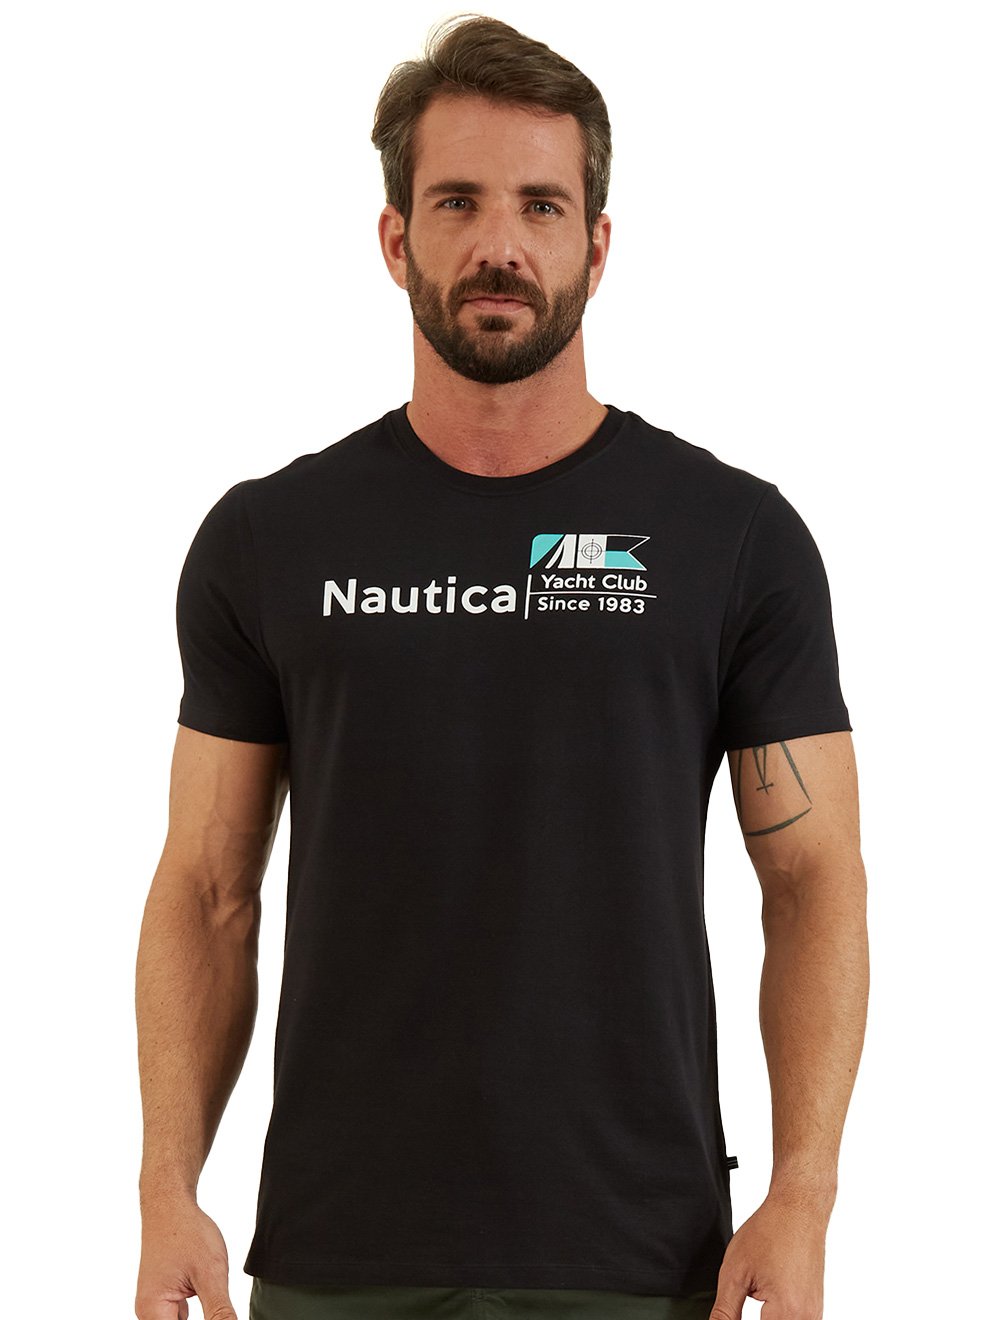 Camiseta Nautica Masculina Yacht Club Since 1983 Preta